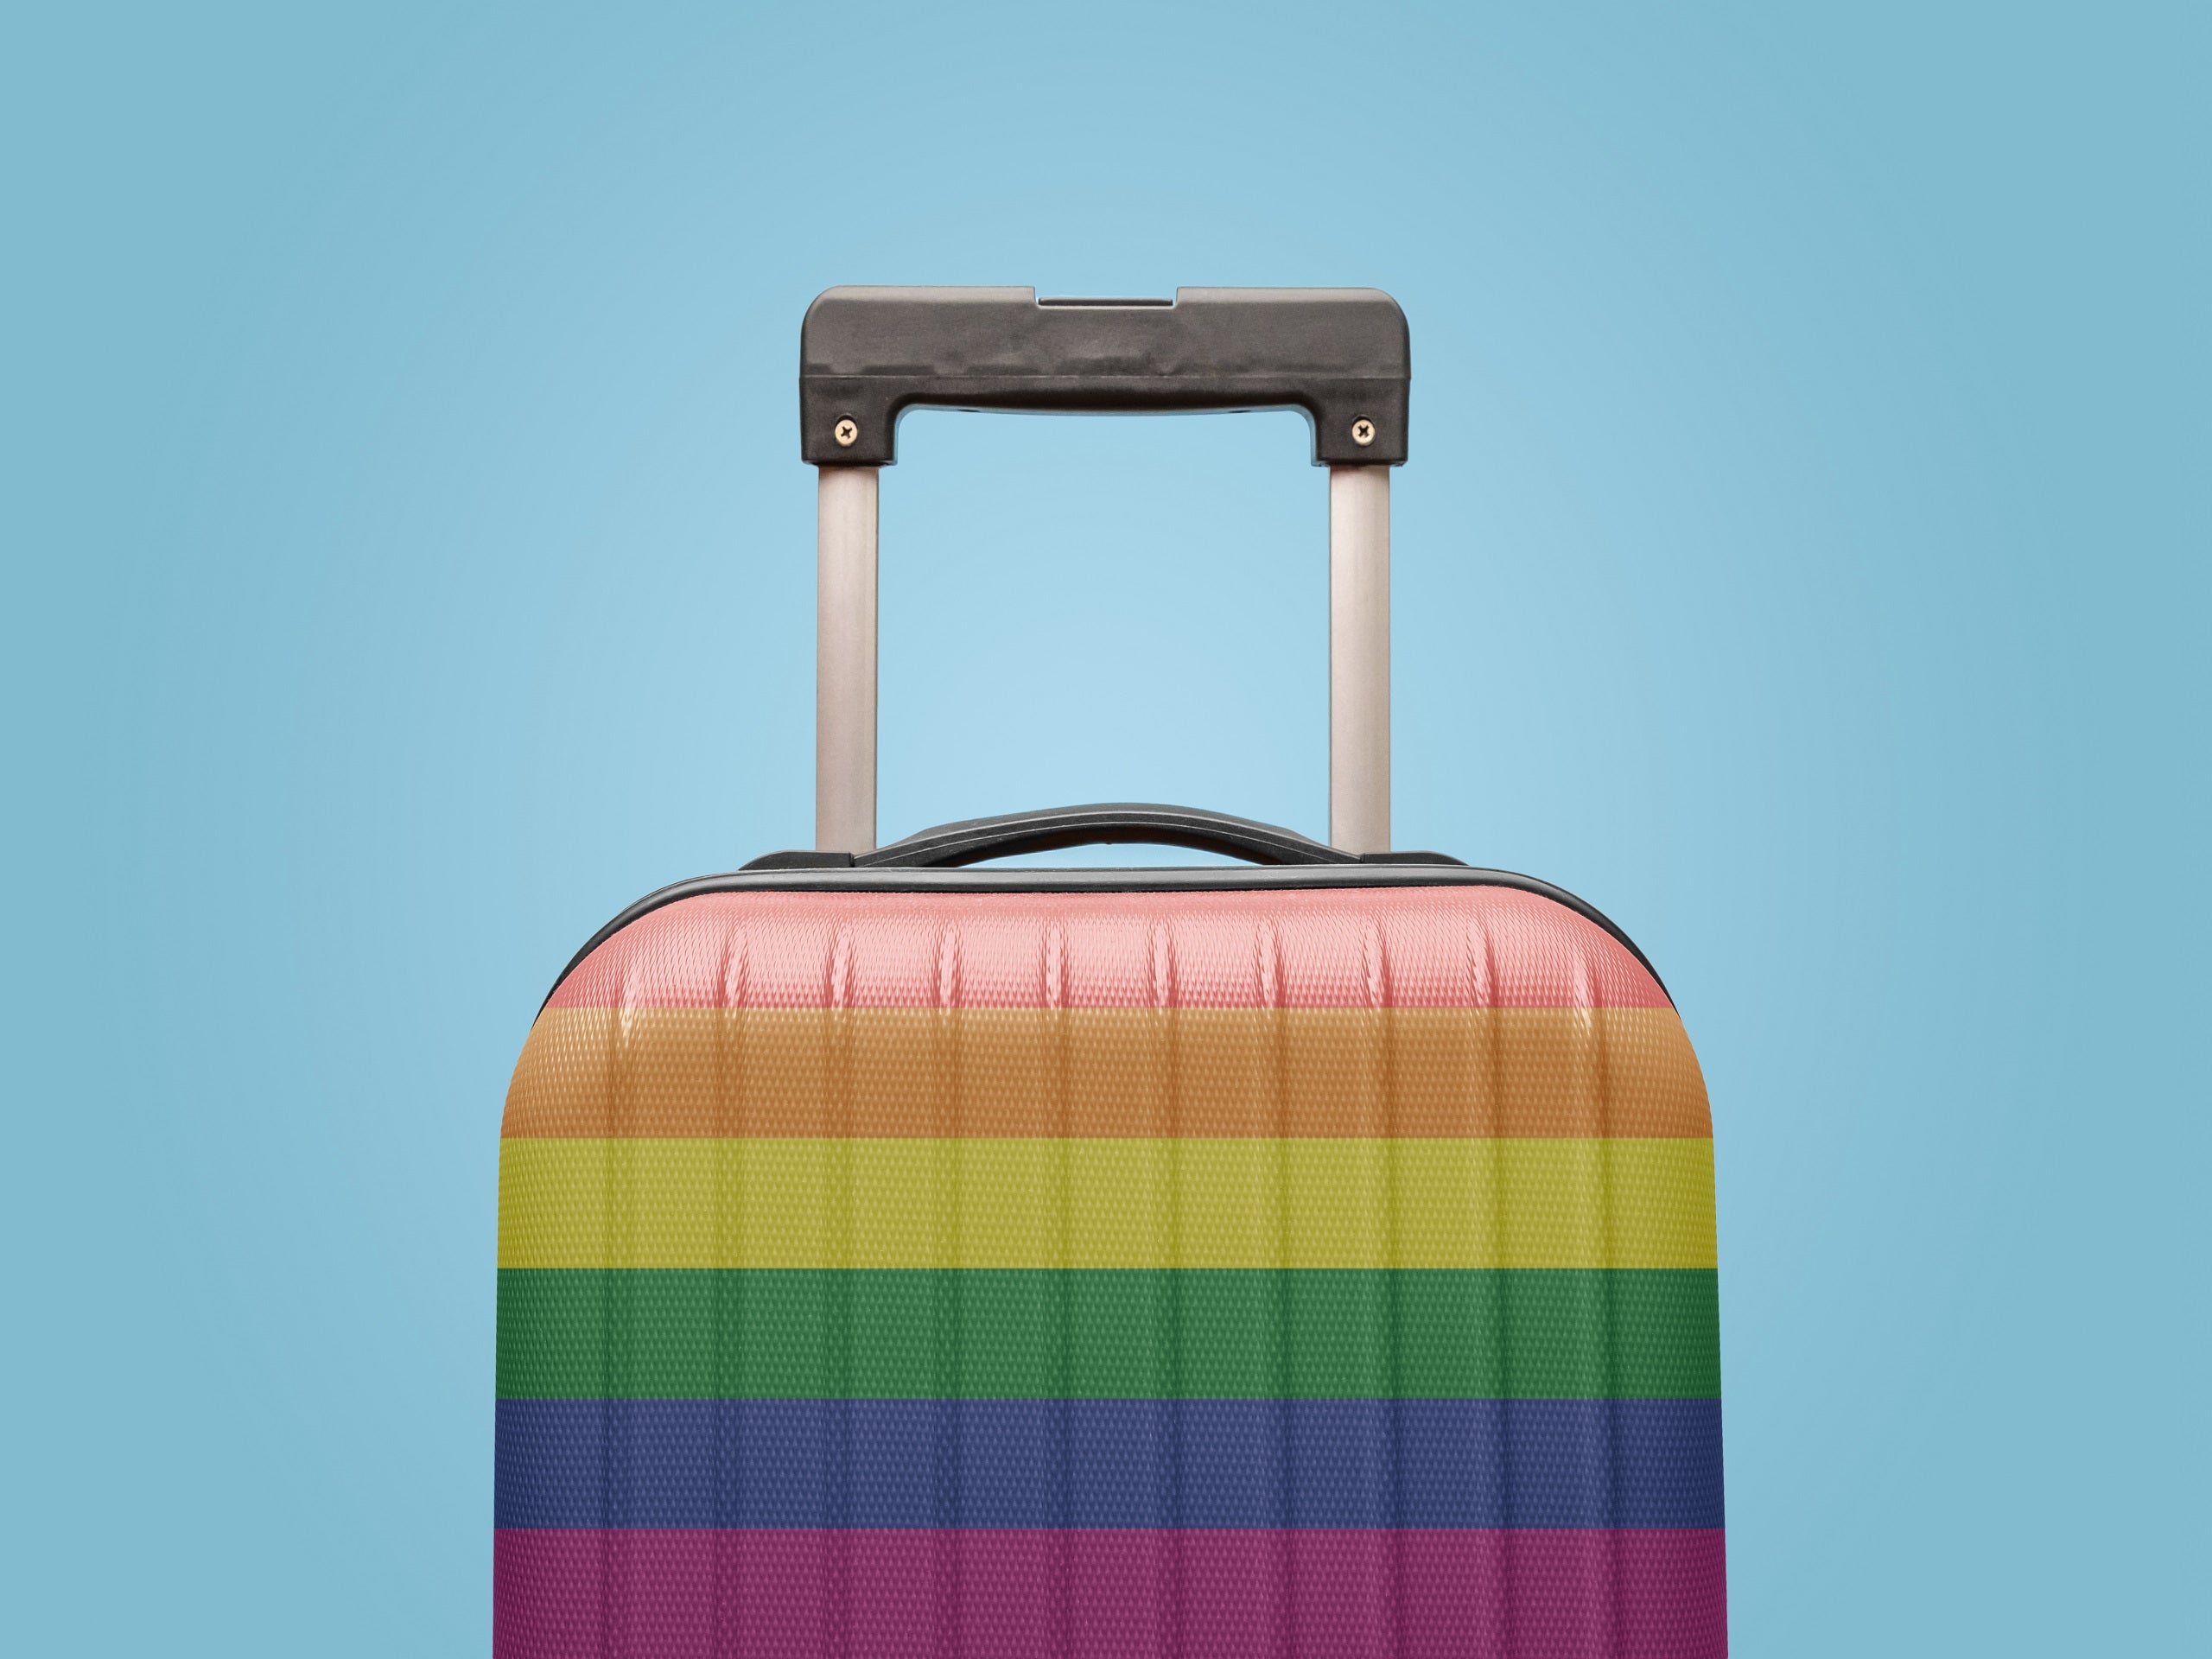 mauritius gay travel